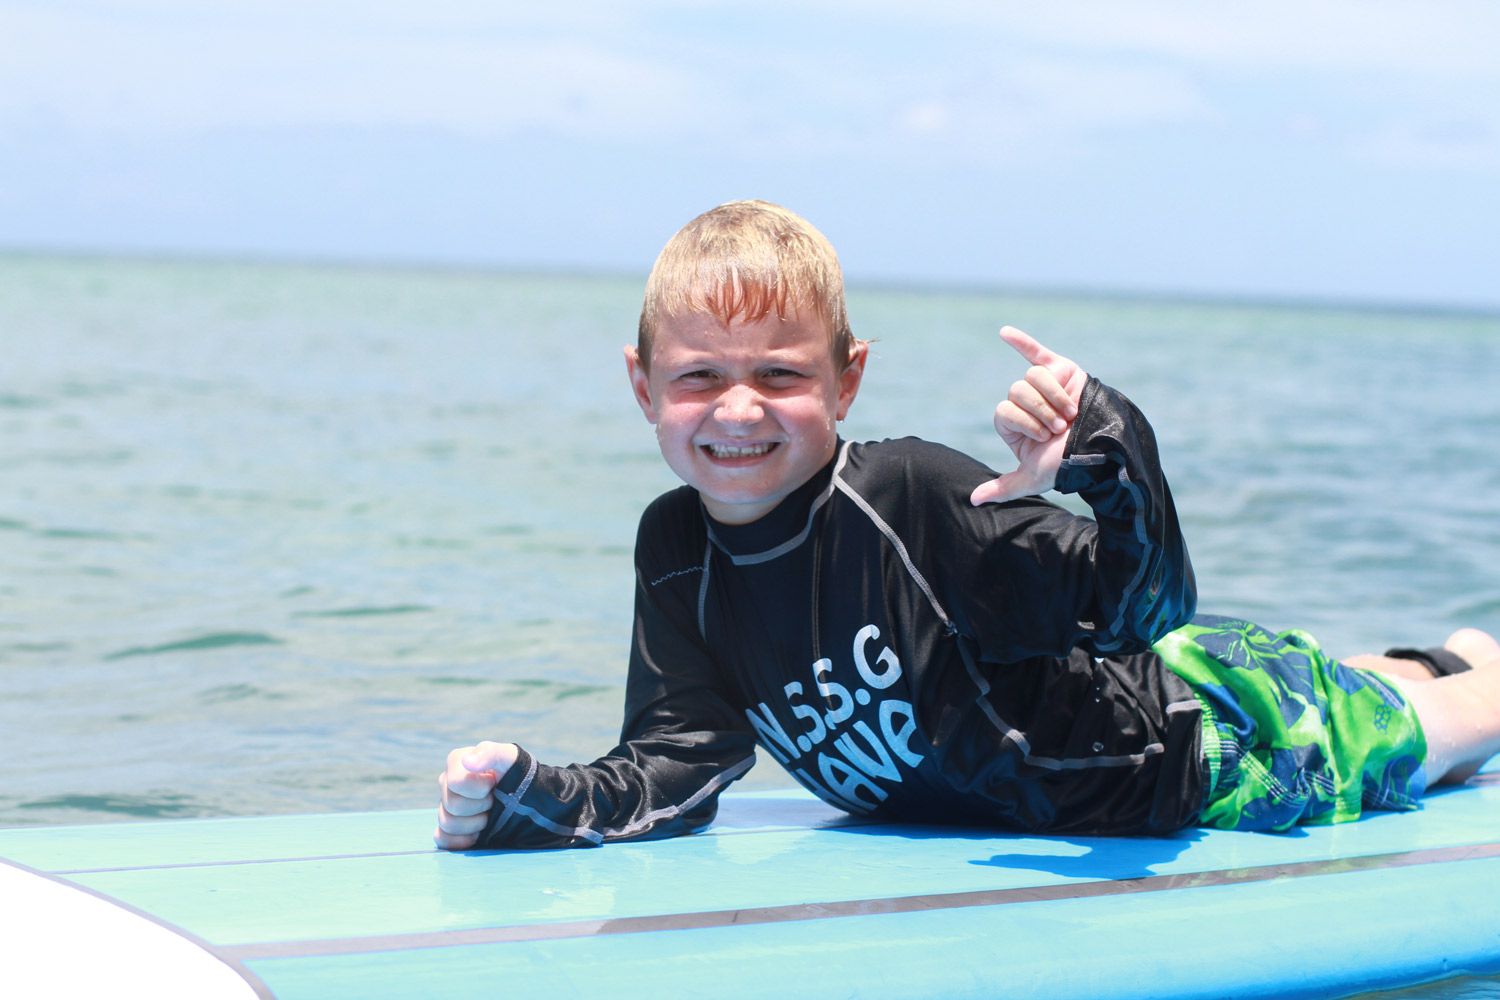 A very happy surfer boy